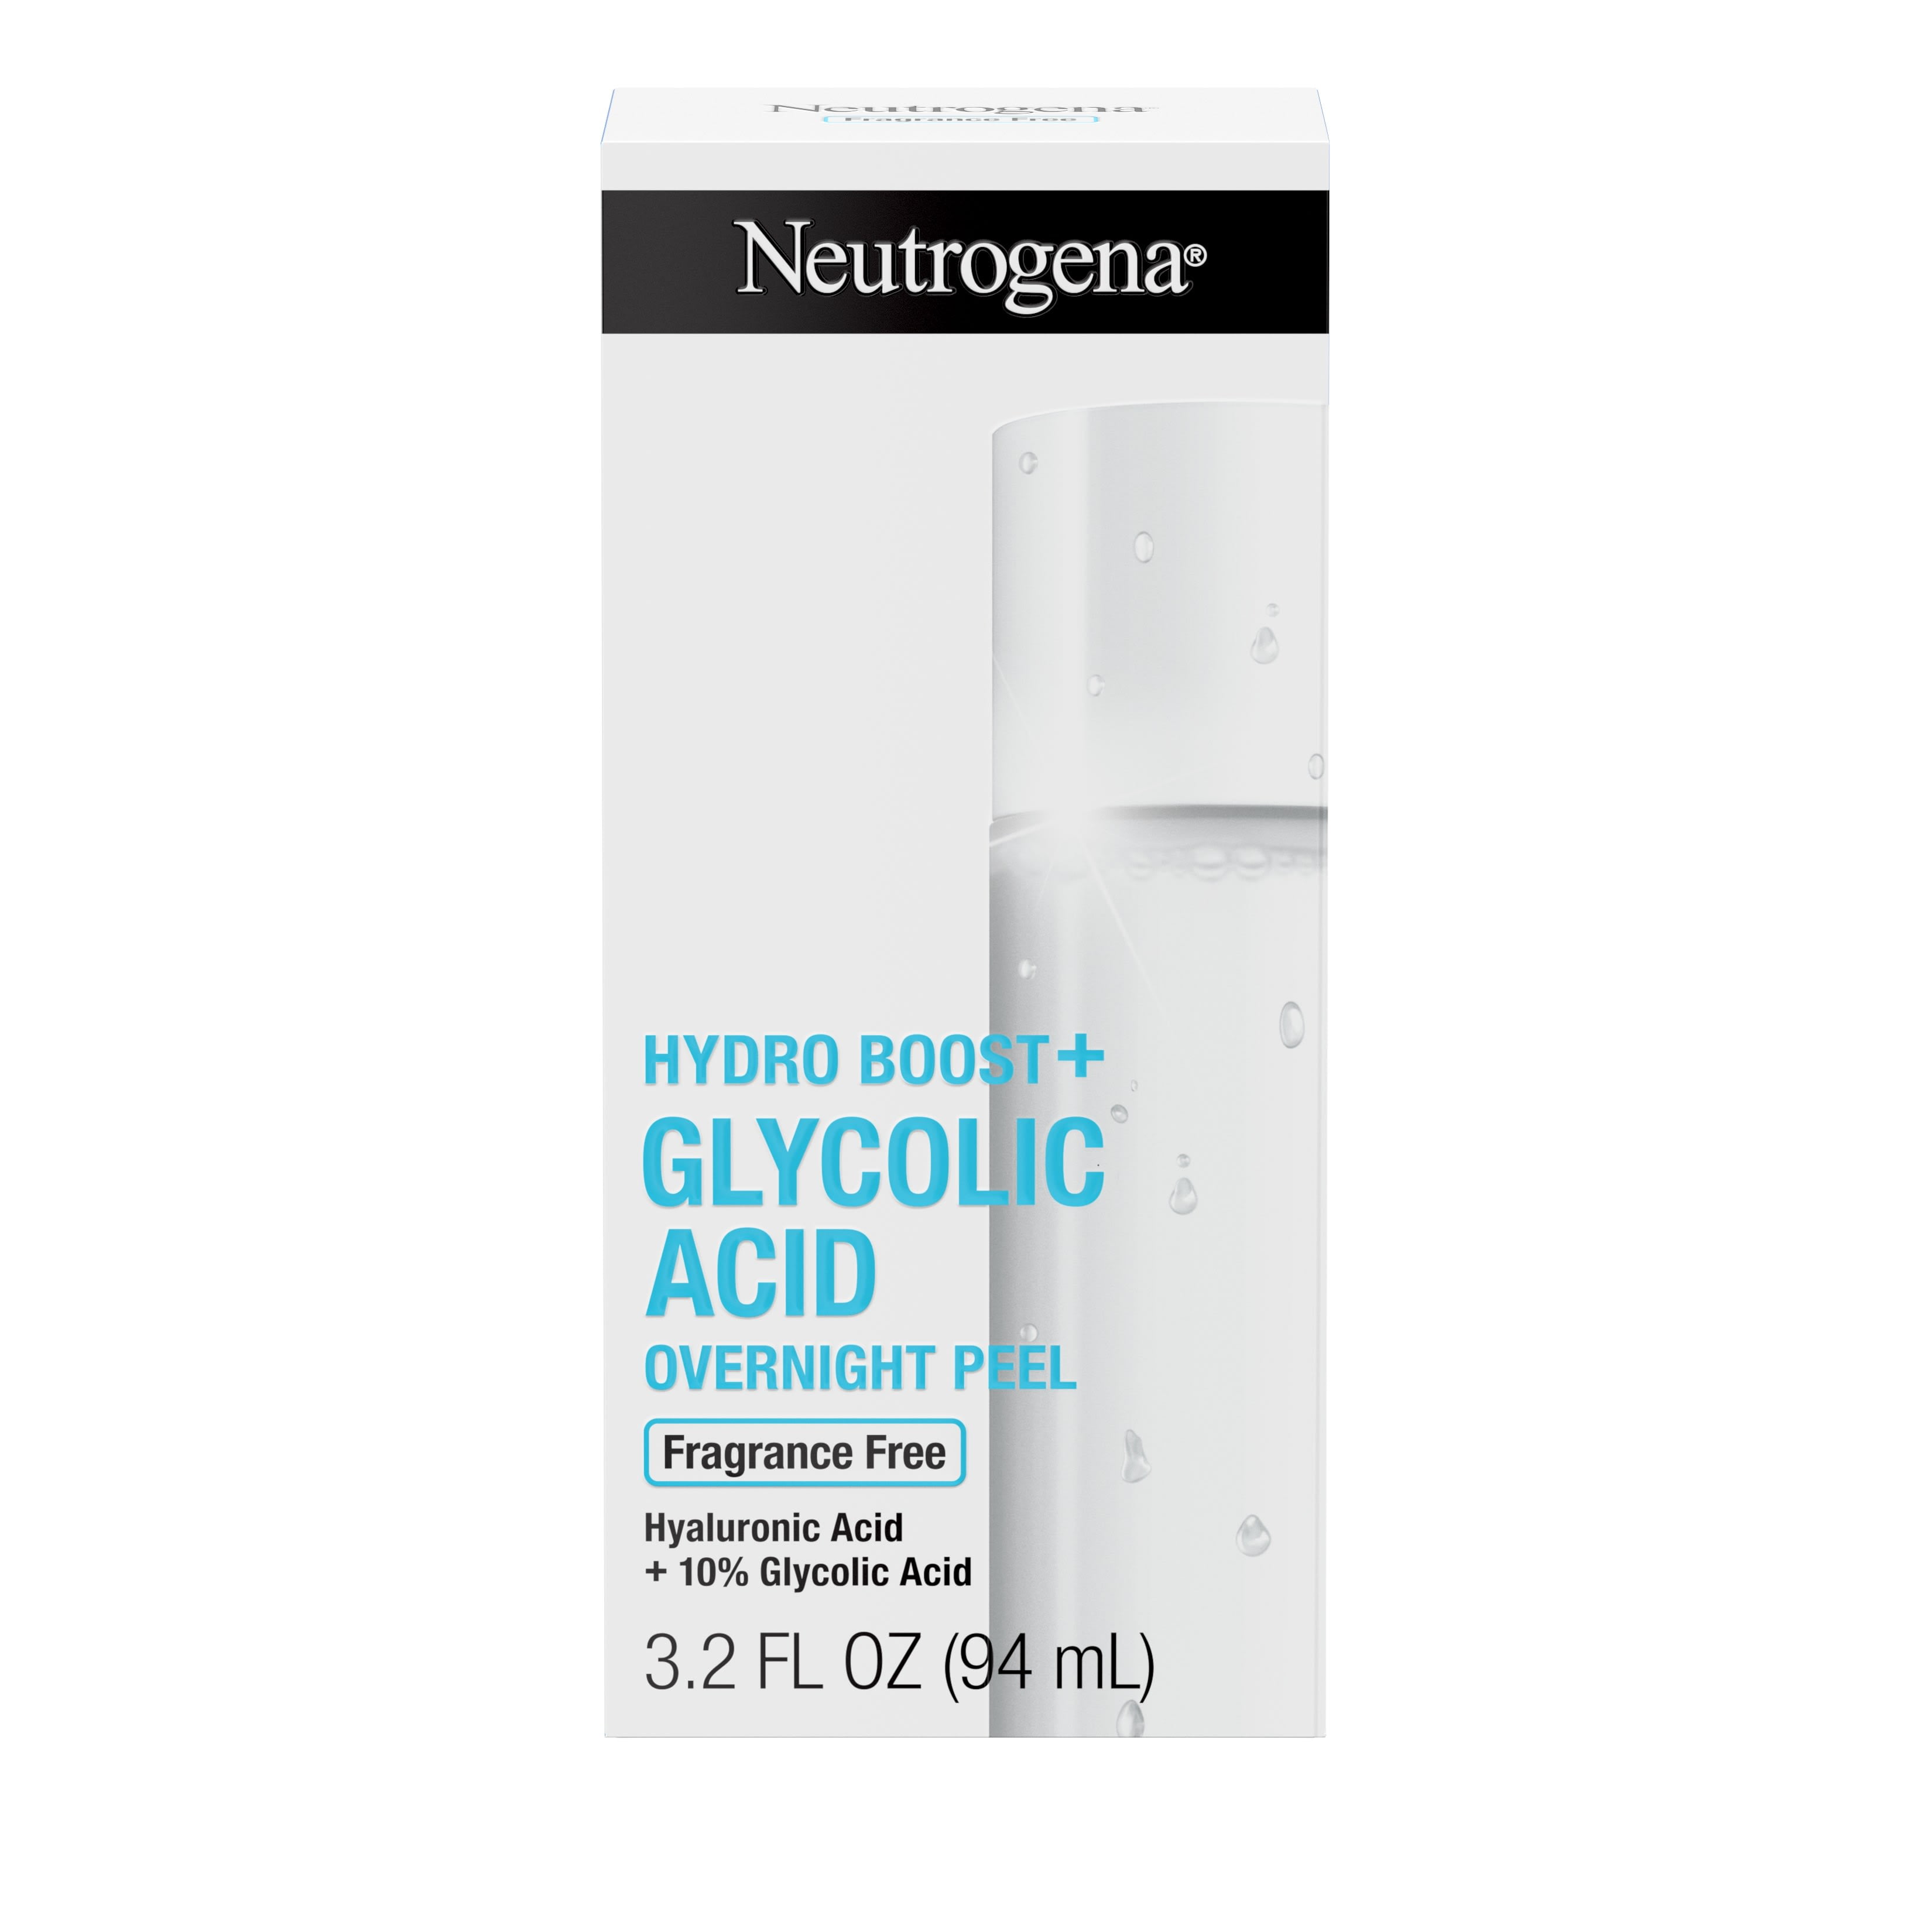 Neutrogena Hydro Boost+ Glycolic Acid Overnight Face Peel, 3.2 fl. oz